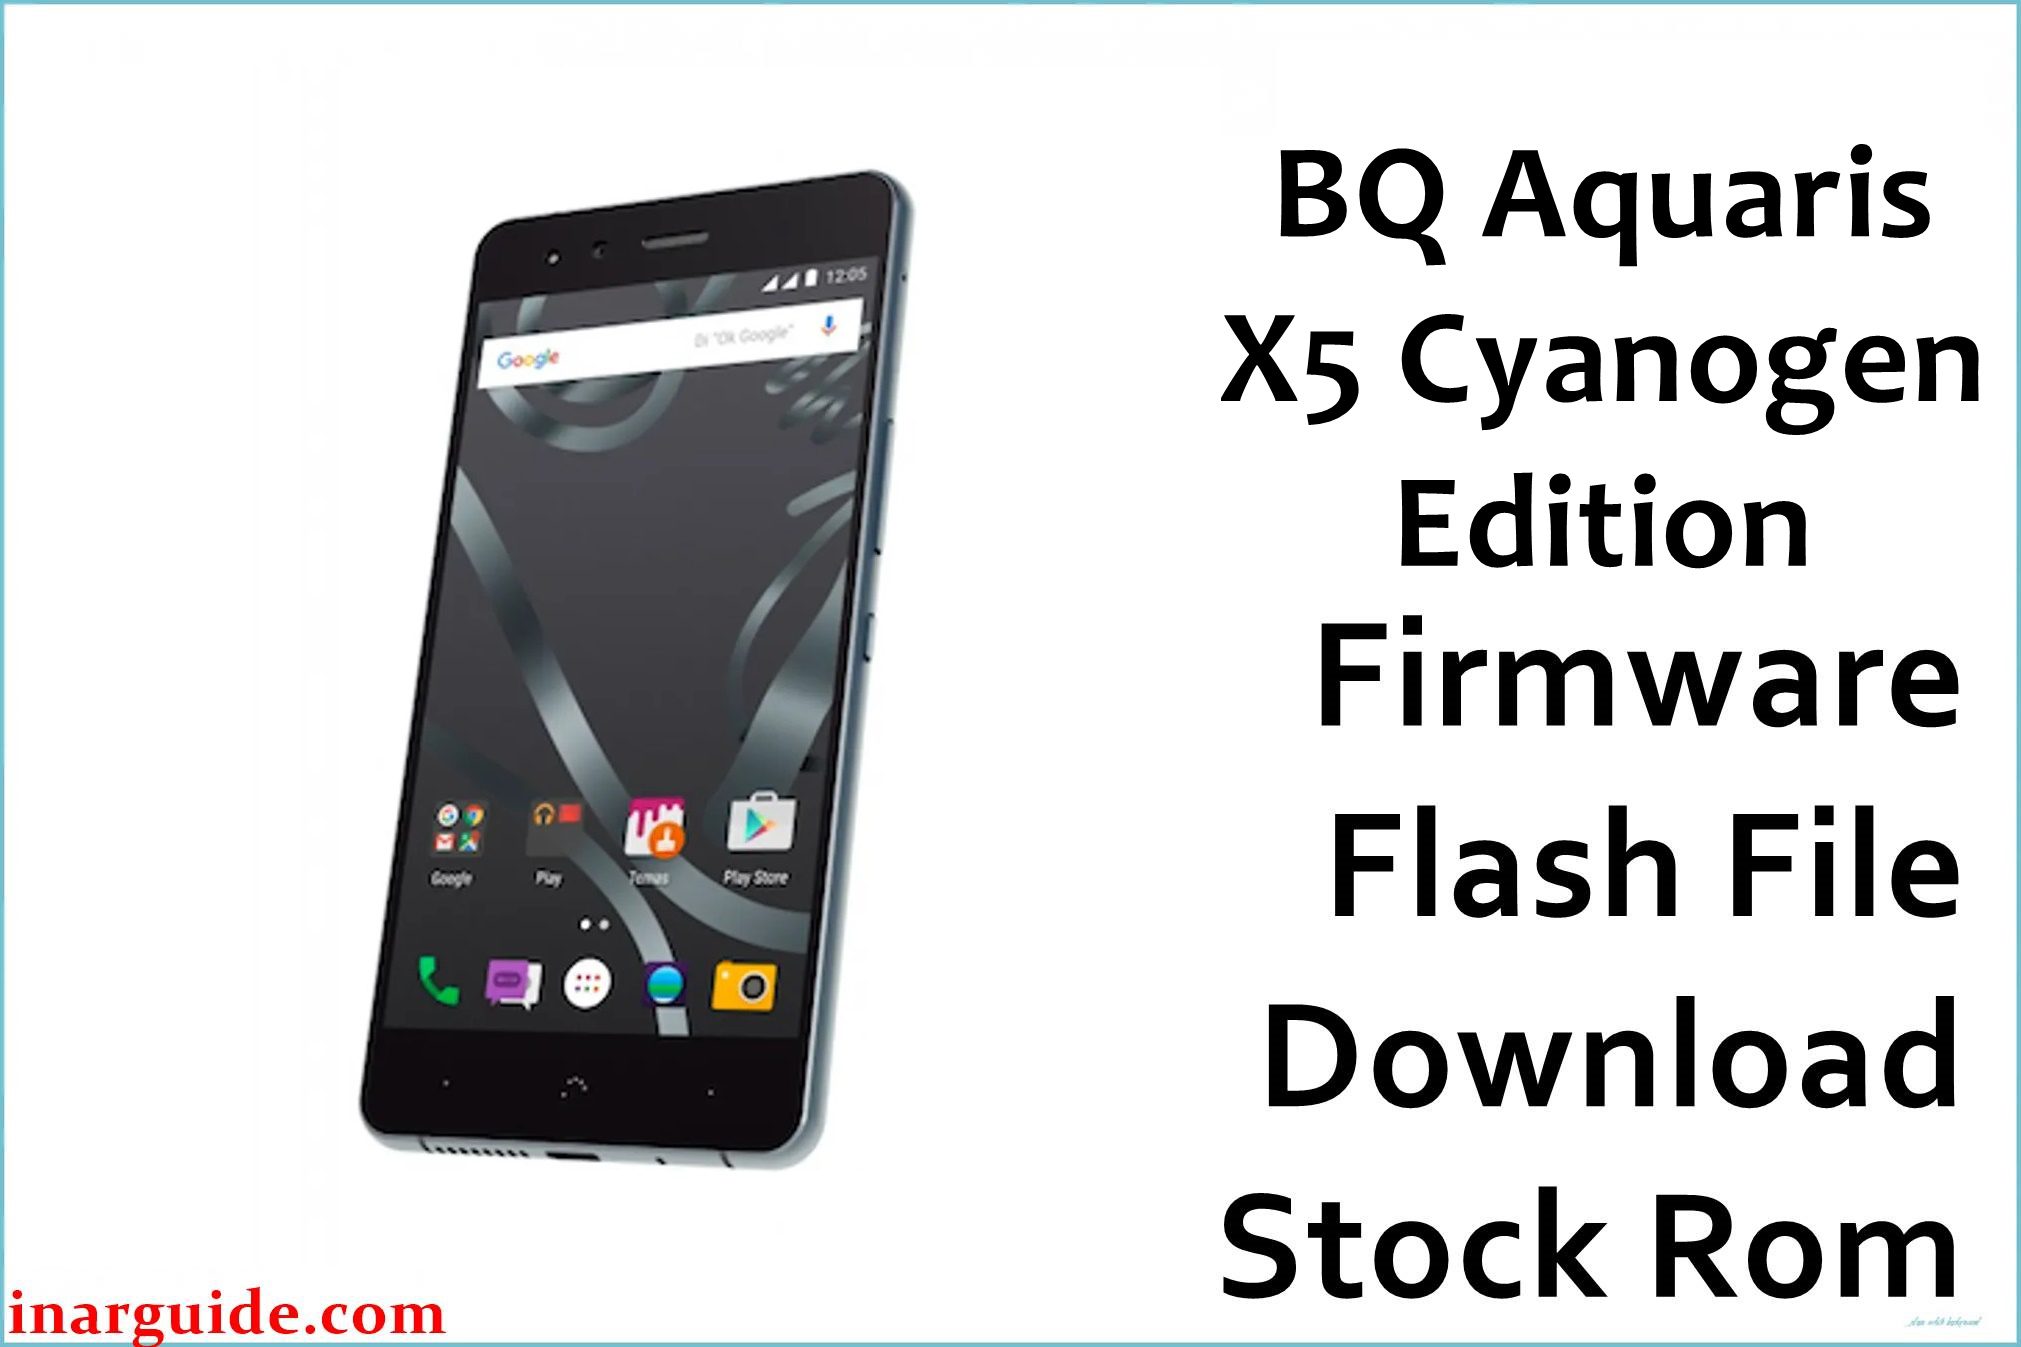 BQ Aquaris X5 Cyanogen Edition